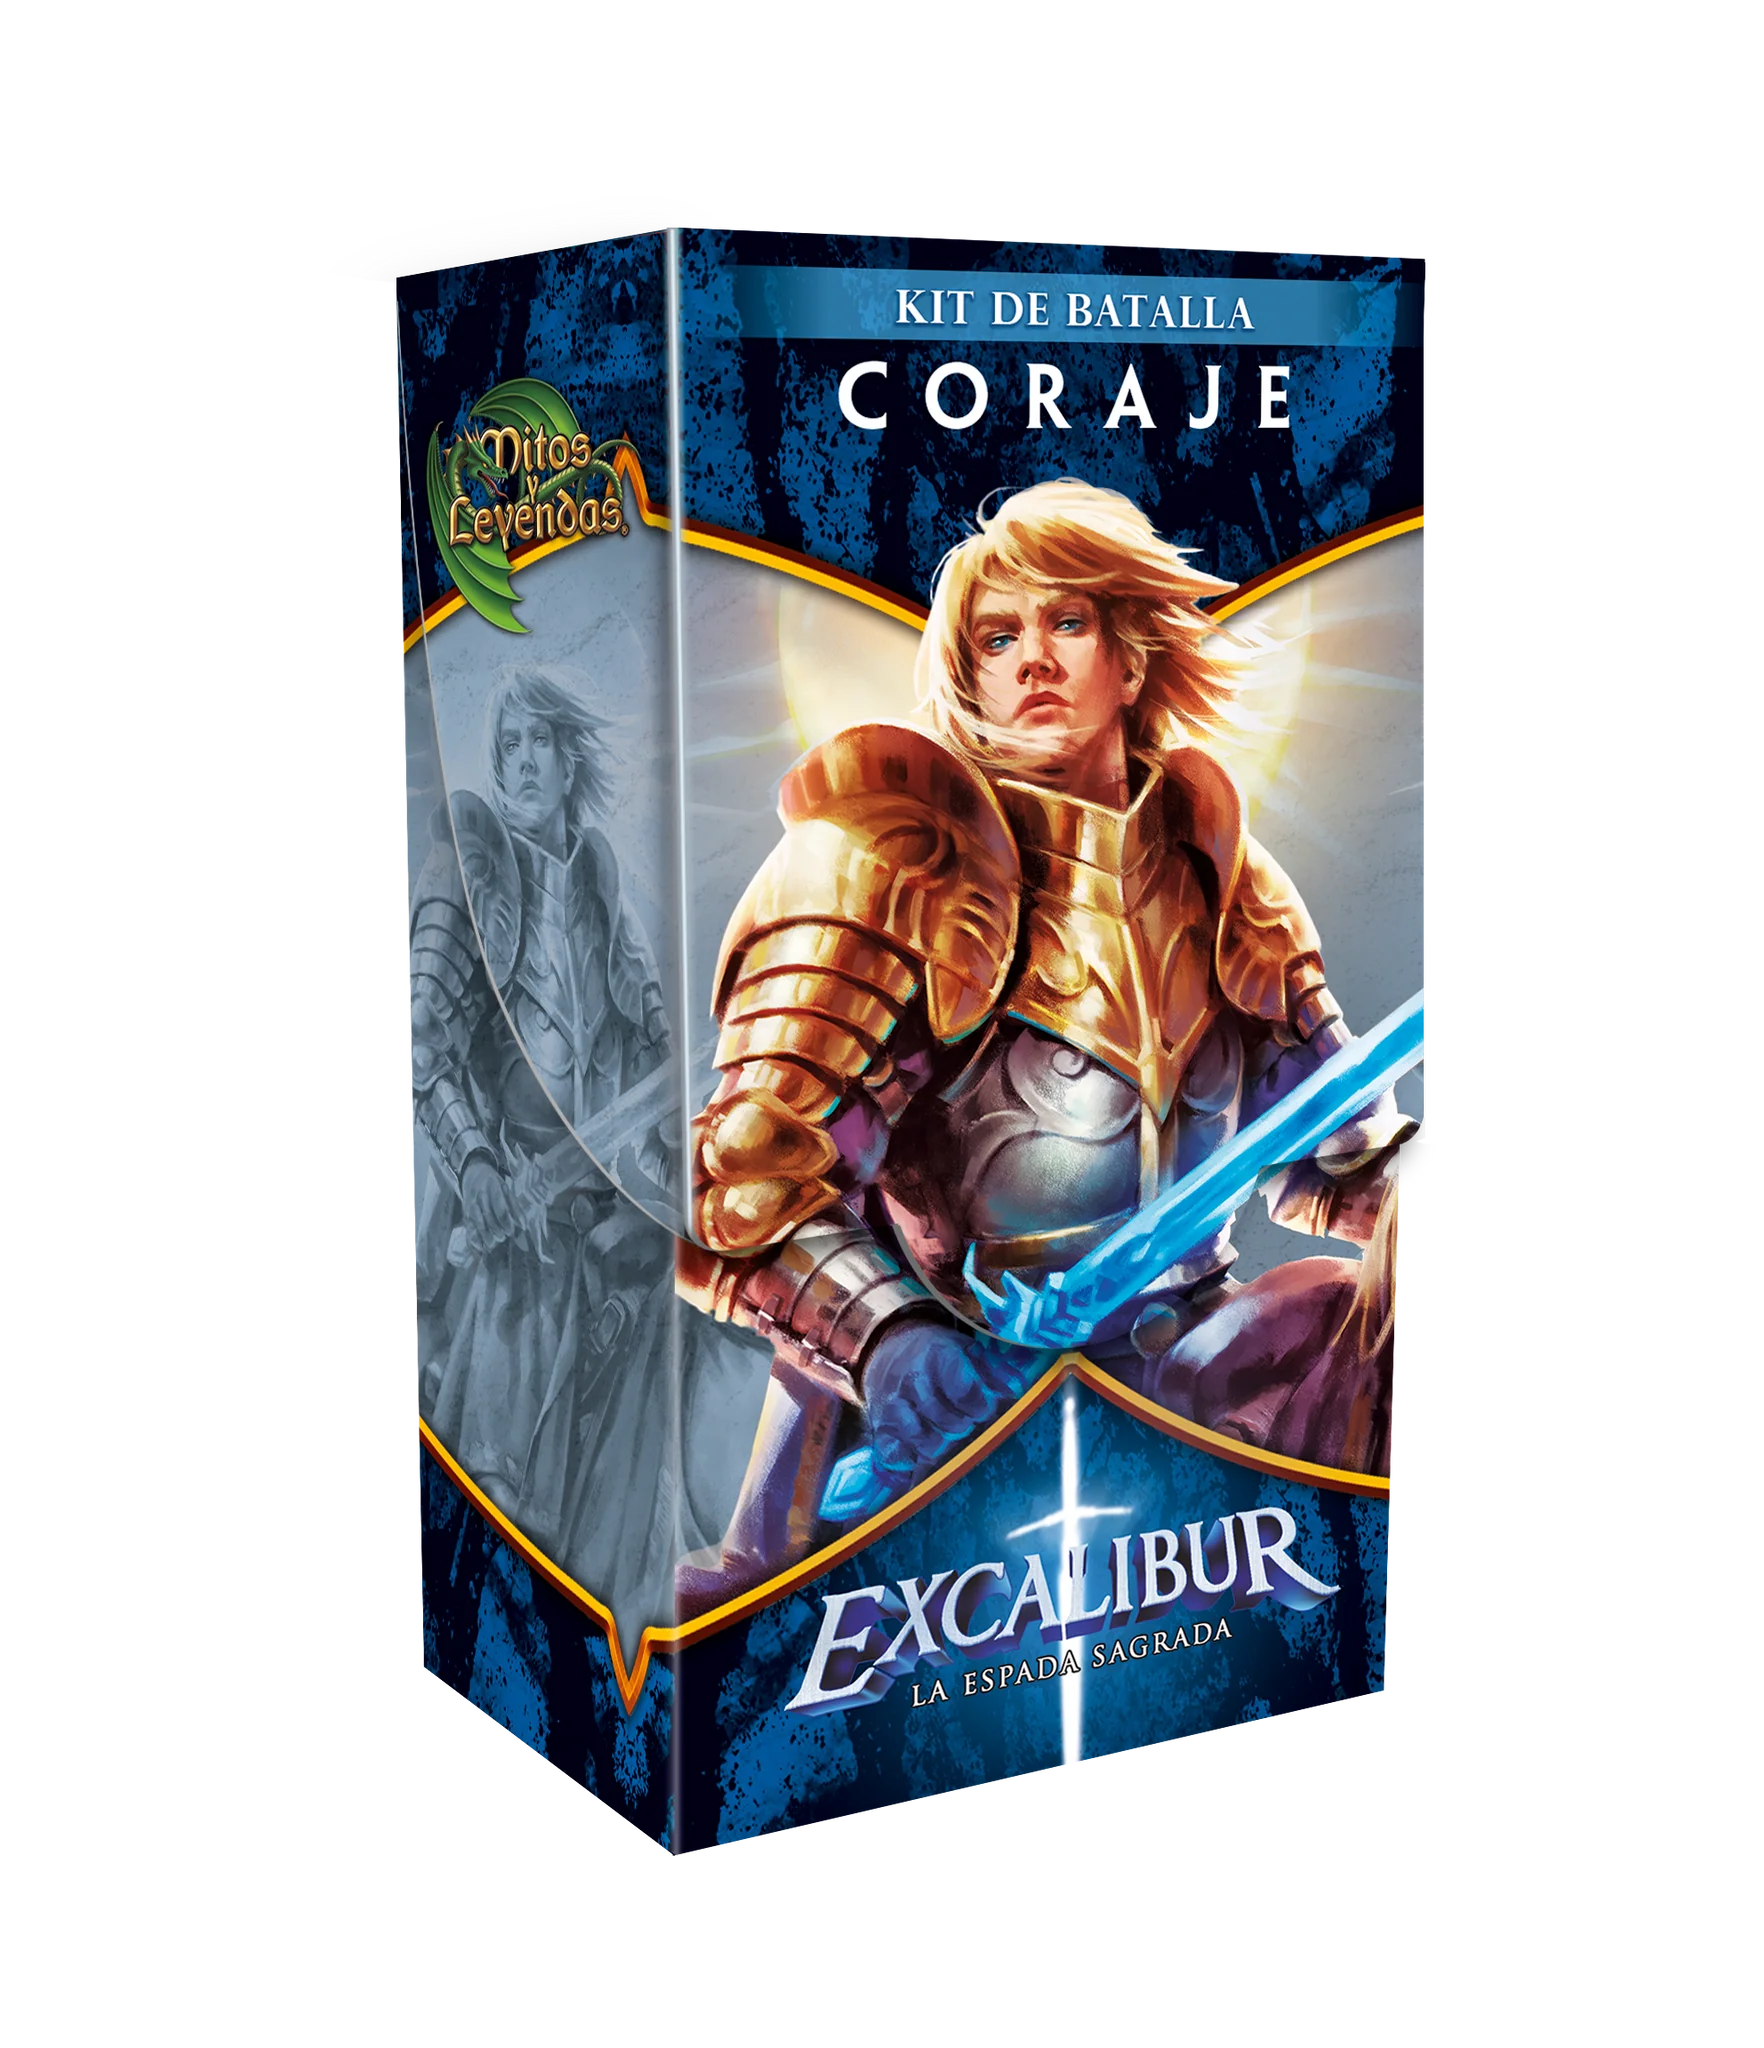 Kit de Batalla Excalibur - Coraje